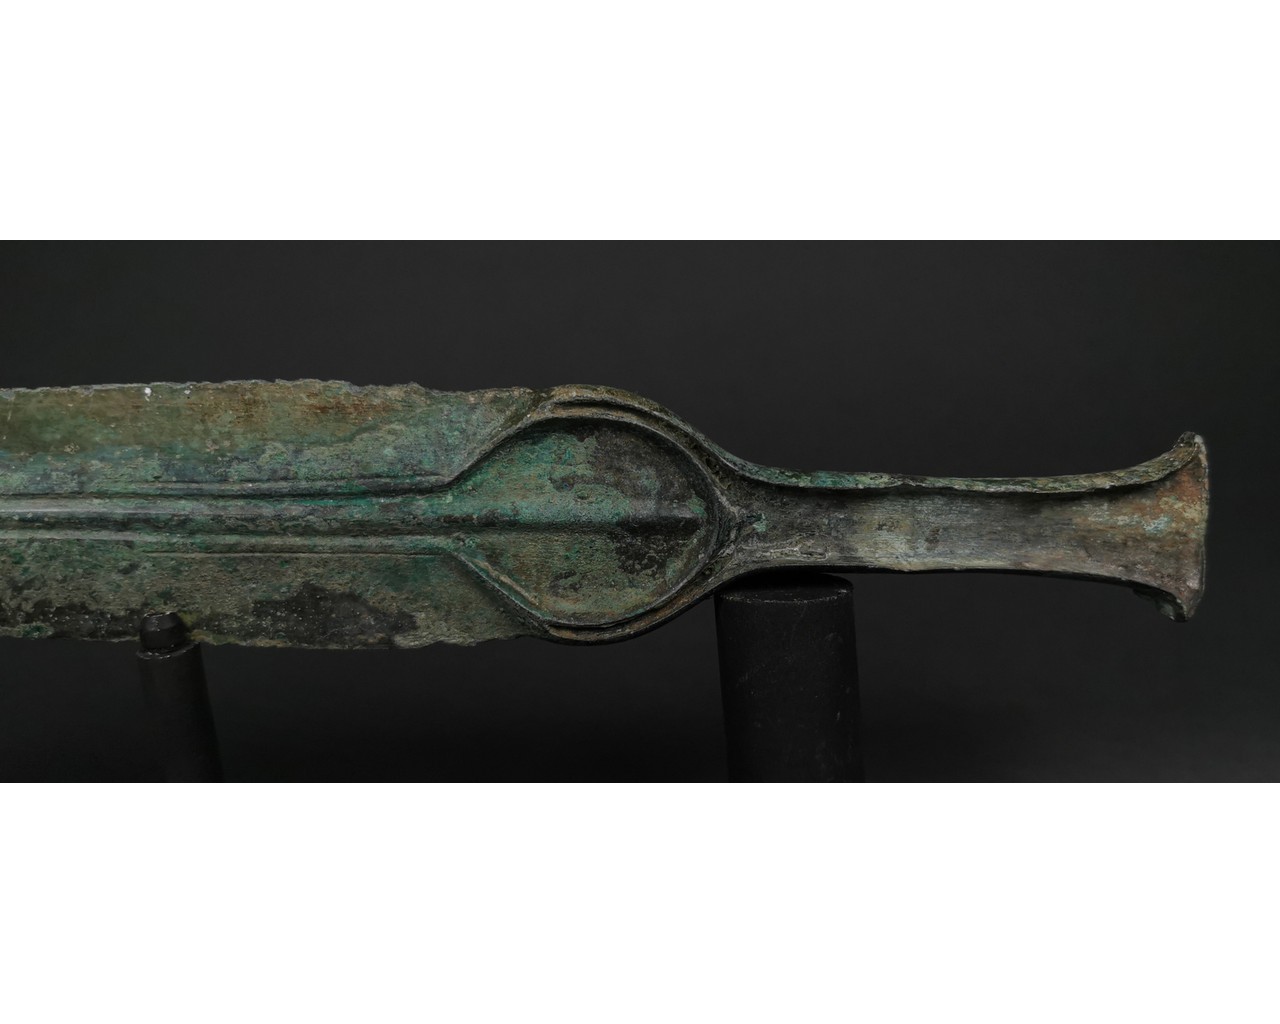 SUPERB ANCIENT BRONZE SWORD WITH IBEX HANDLE - Image 2 of 6